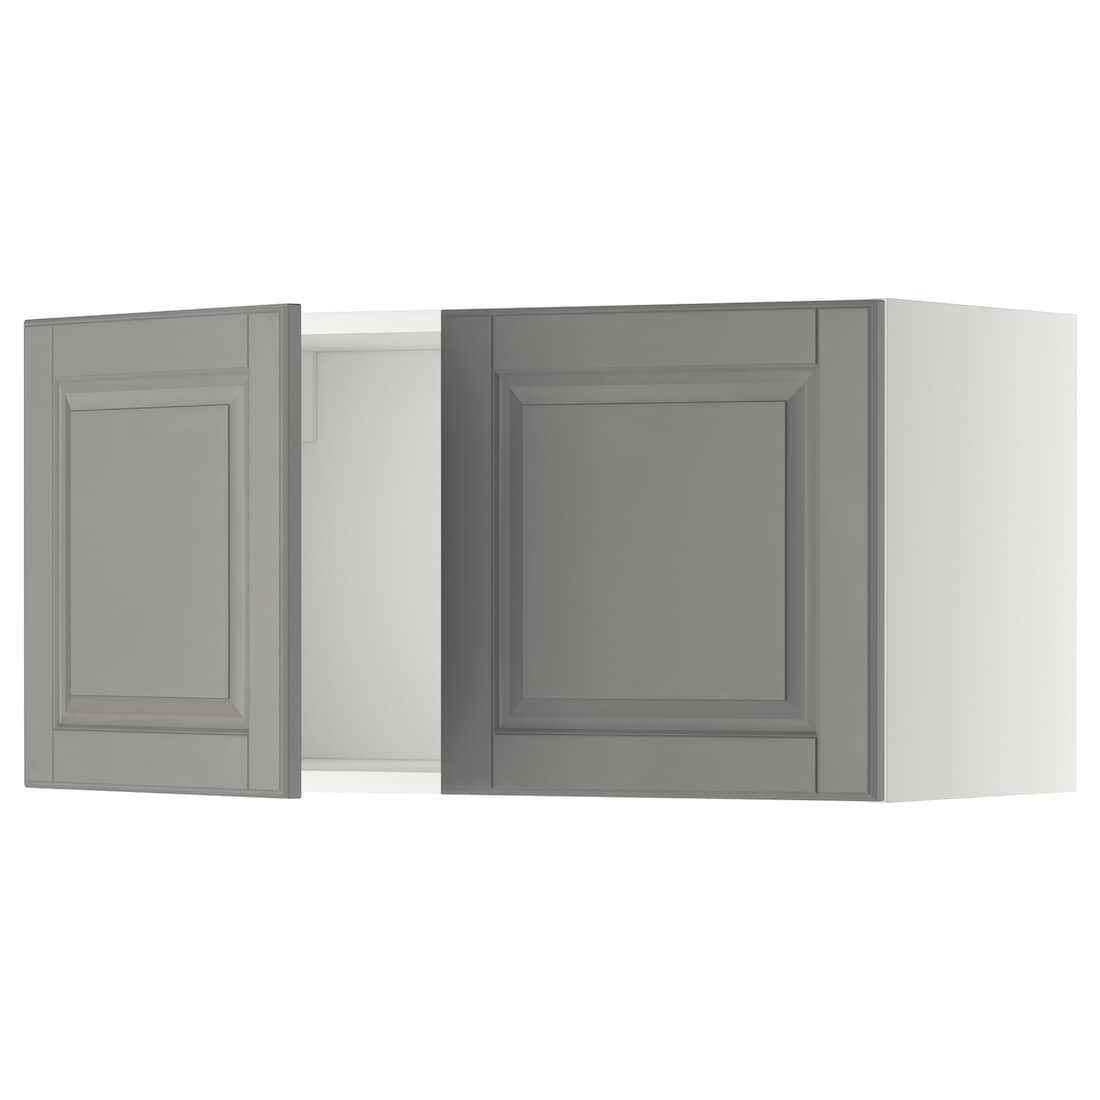 METOD МЕТОД Навесной шкаф с 2 дверями, белый / Bodbyn серый, 80x40 см